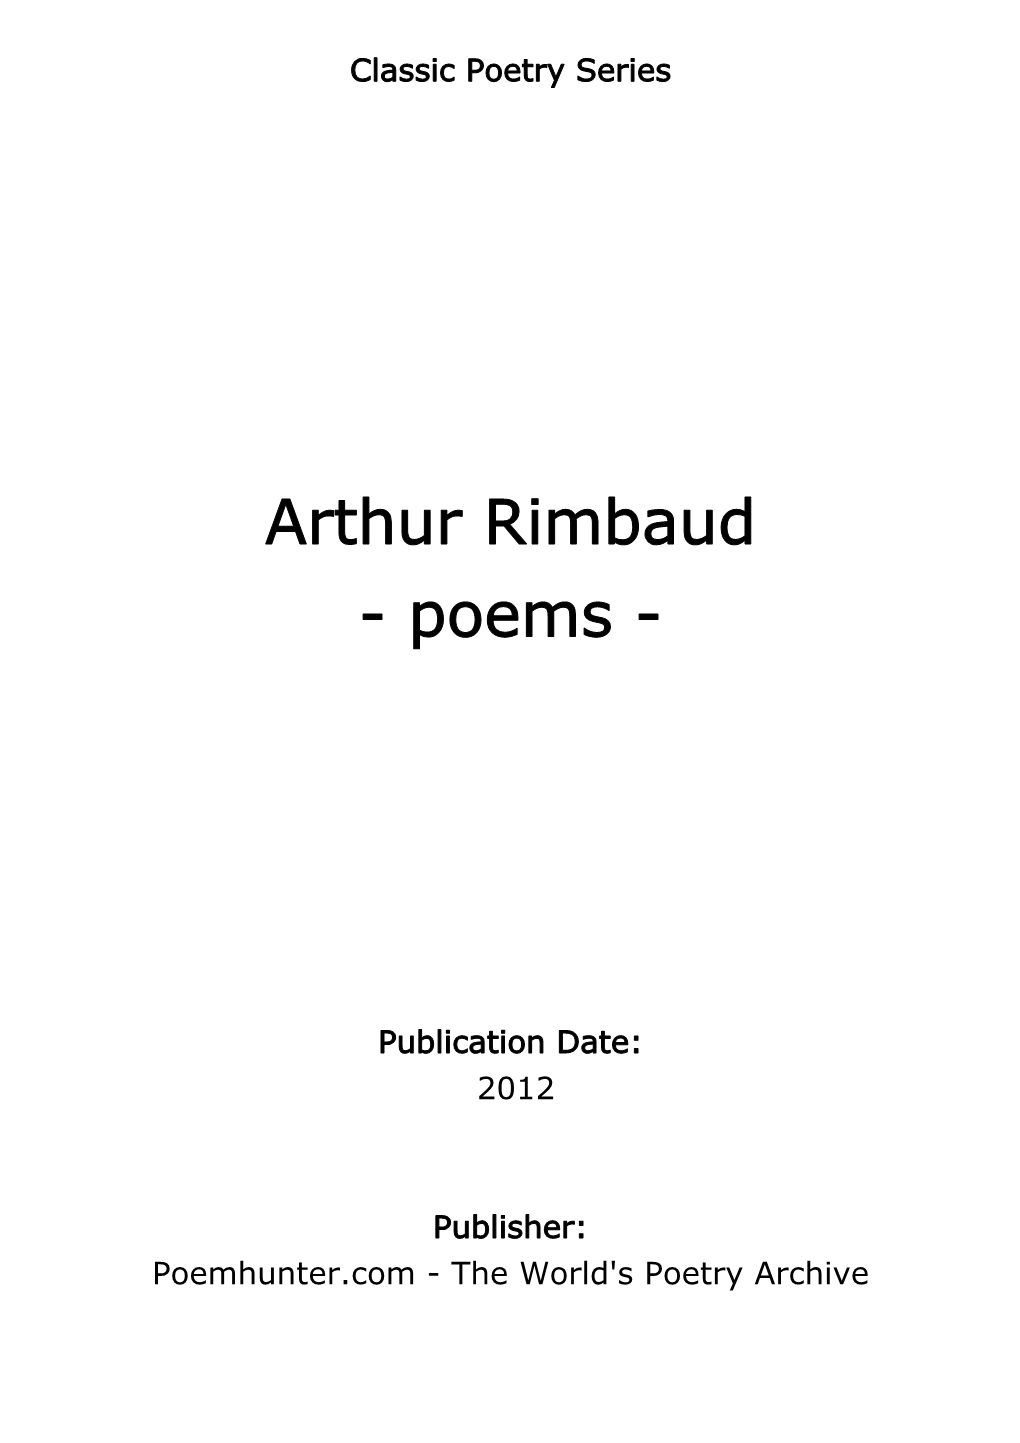 Arthur Rimbaud - Poems